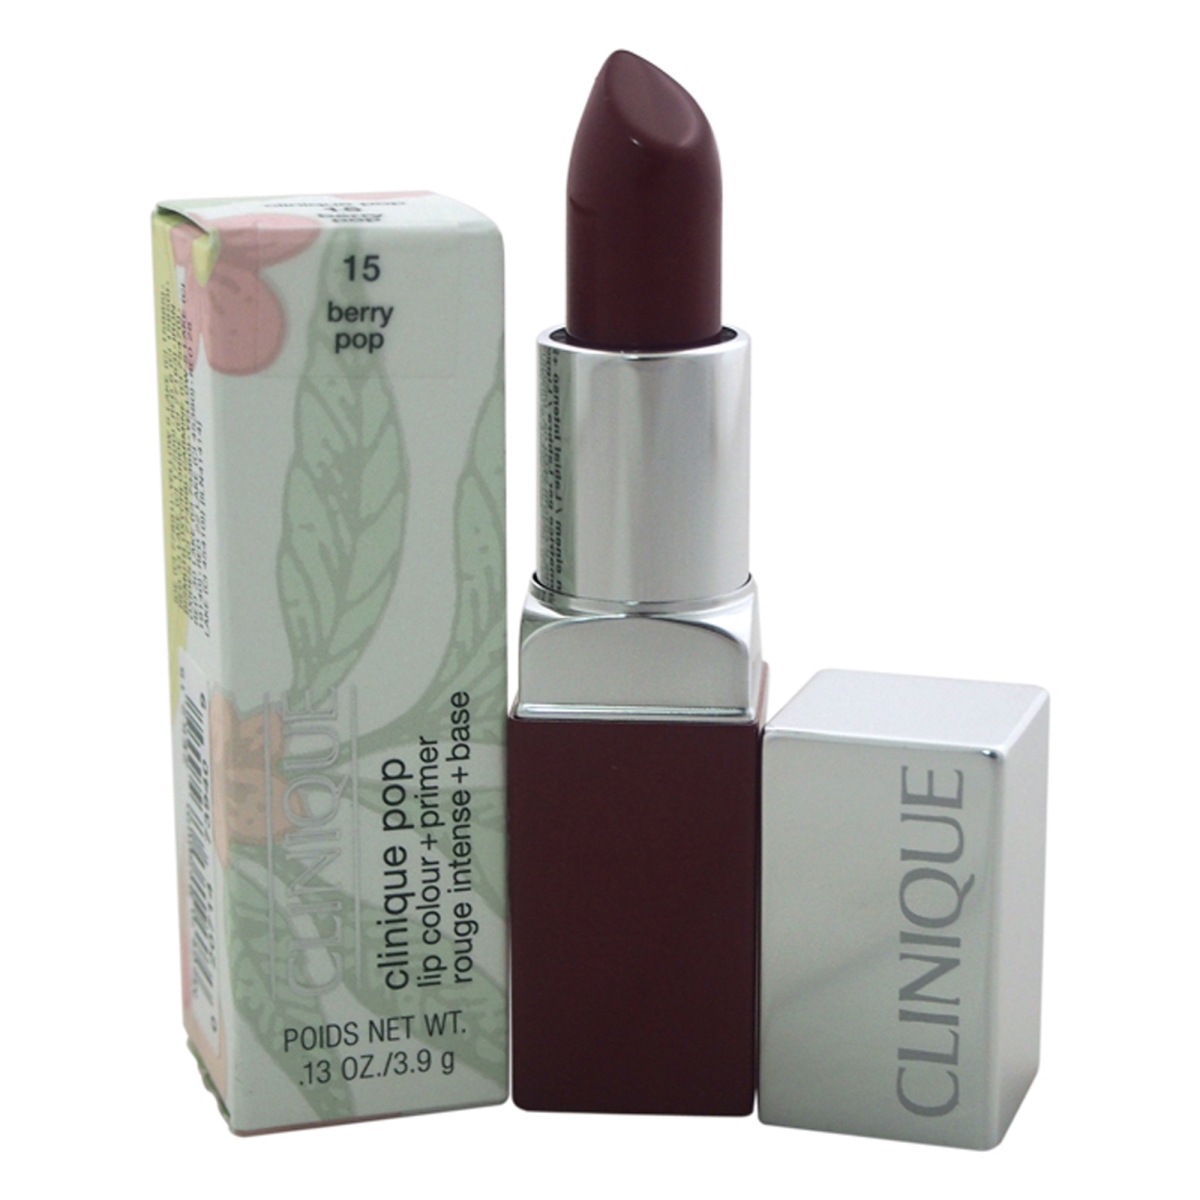 W-c-6779 0.13 Oz No. 15 Berry Pop Plus Primer Lipstick For Women